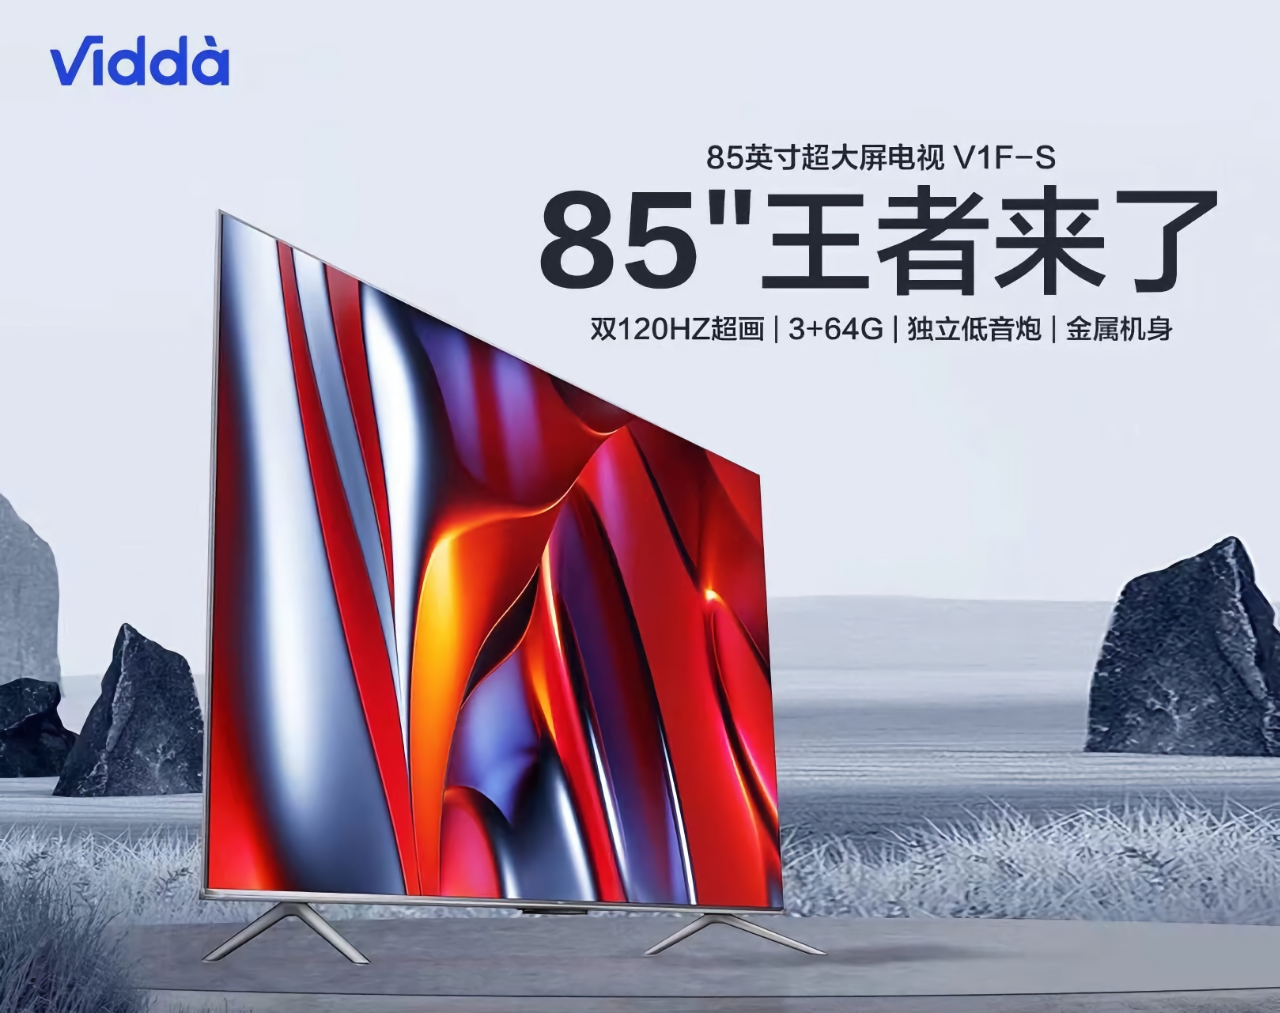 Hisense Vidda 85V1F-S Smart TV: 85-inch smart TV with 4K LCD screen at 120Hz for $1315